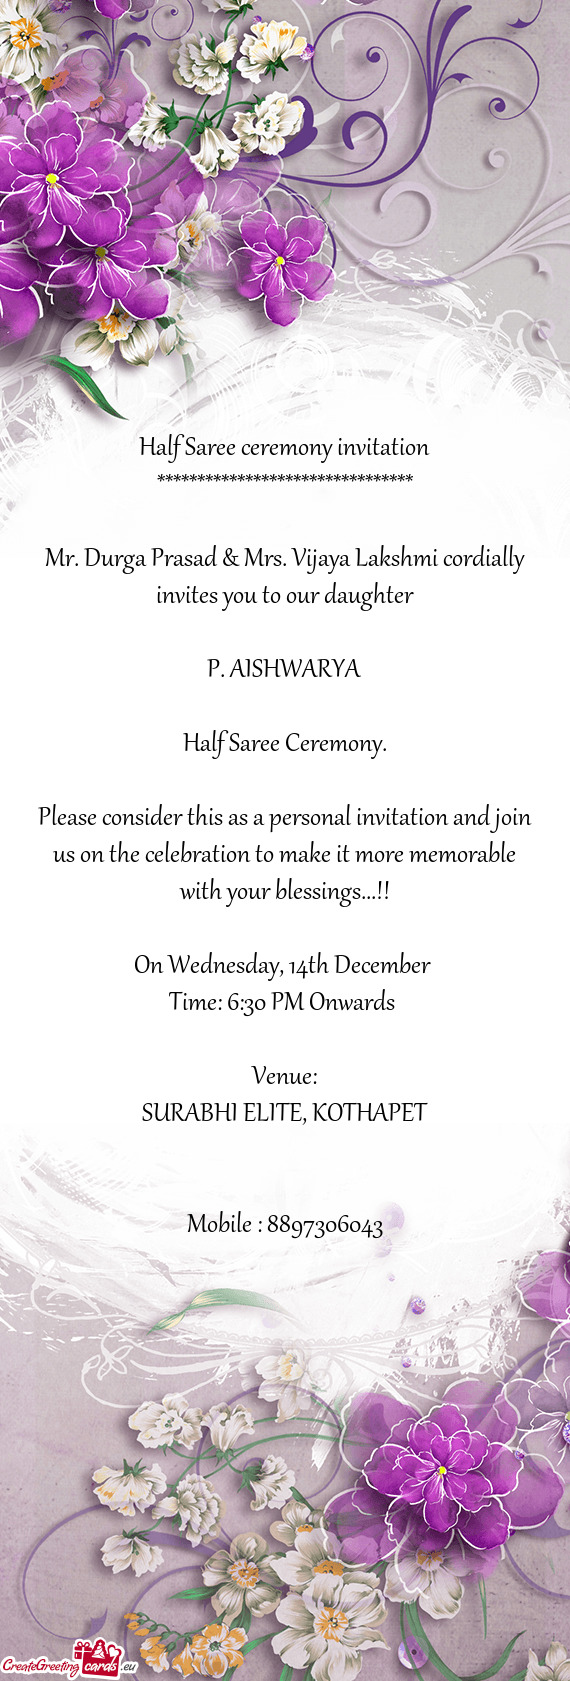 Mr. Durga Prasad & Mrs. Vijaya Lakshmi cordially invites you to our daughter